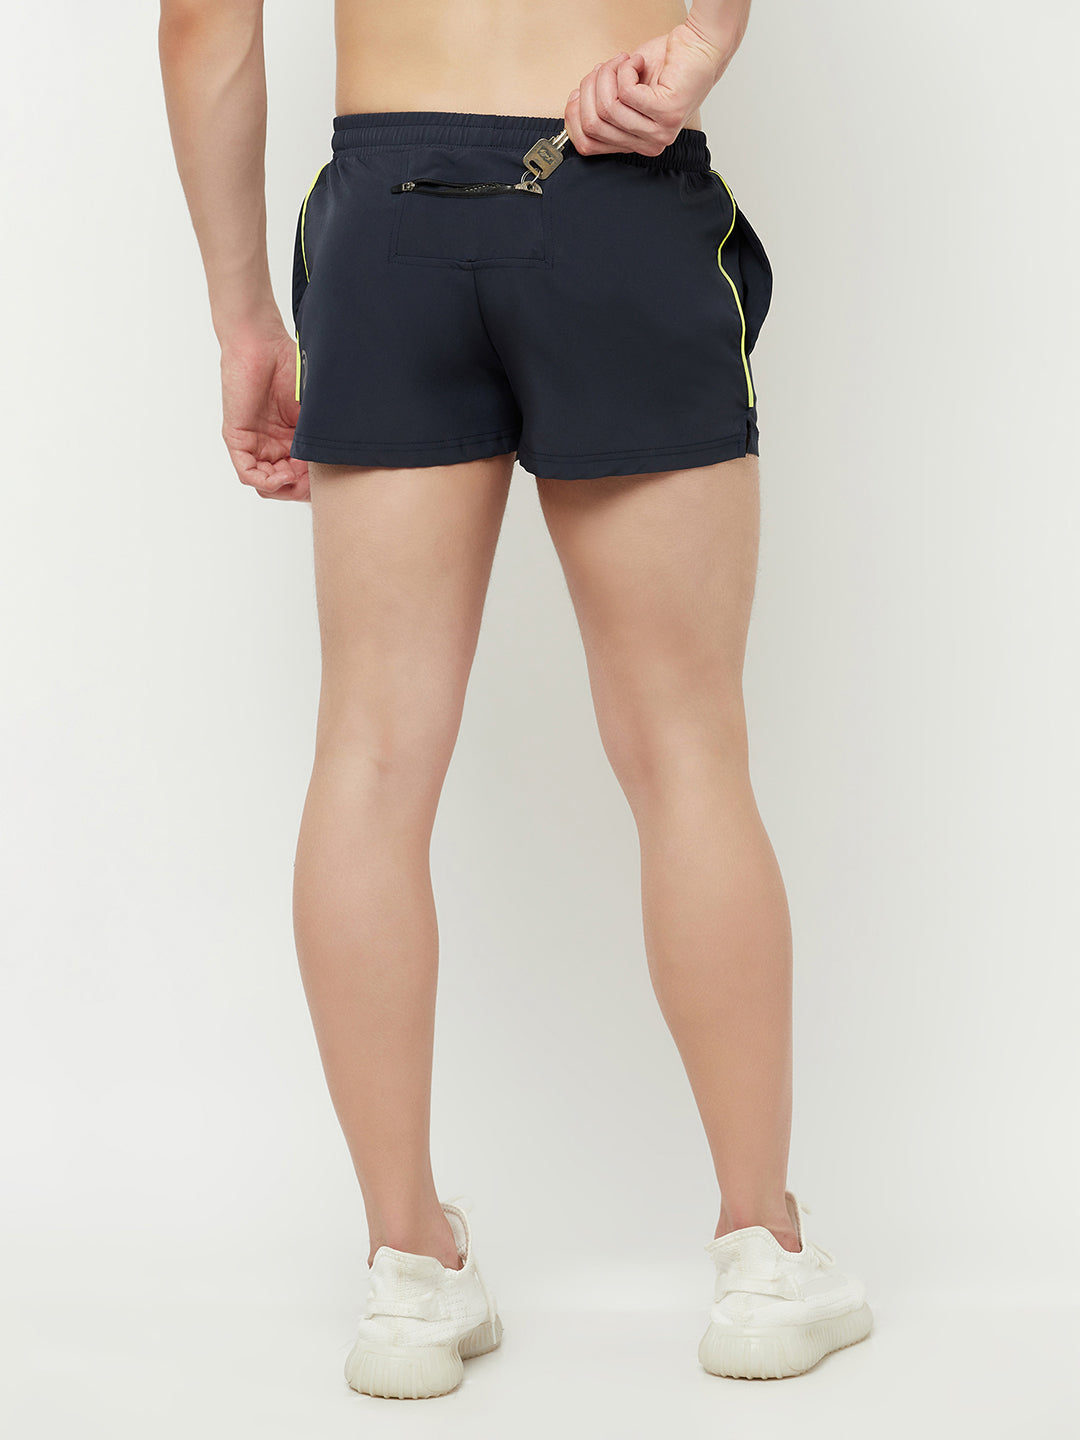 Pro 2" Shorts with Zipper Back Pocket - Pack of 2 Black & Navy